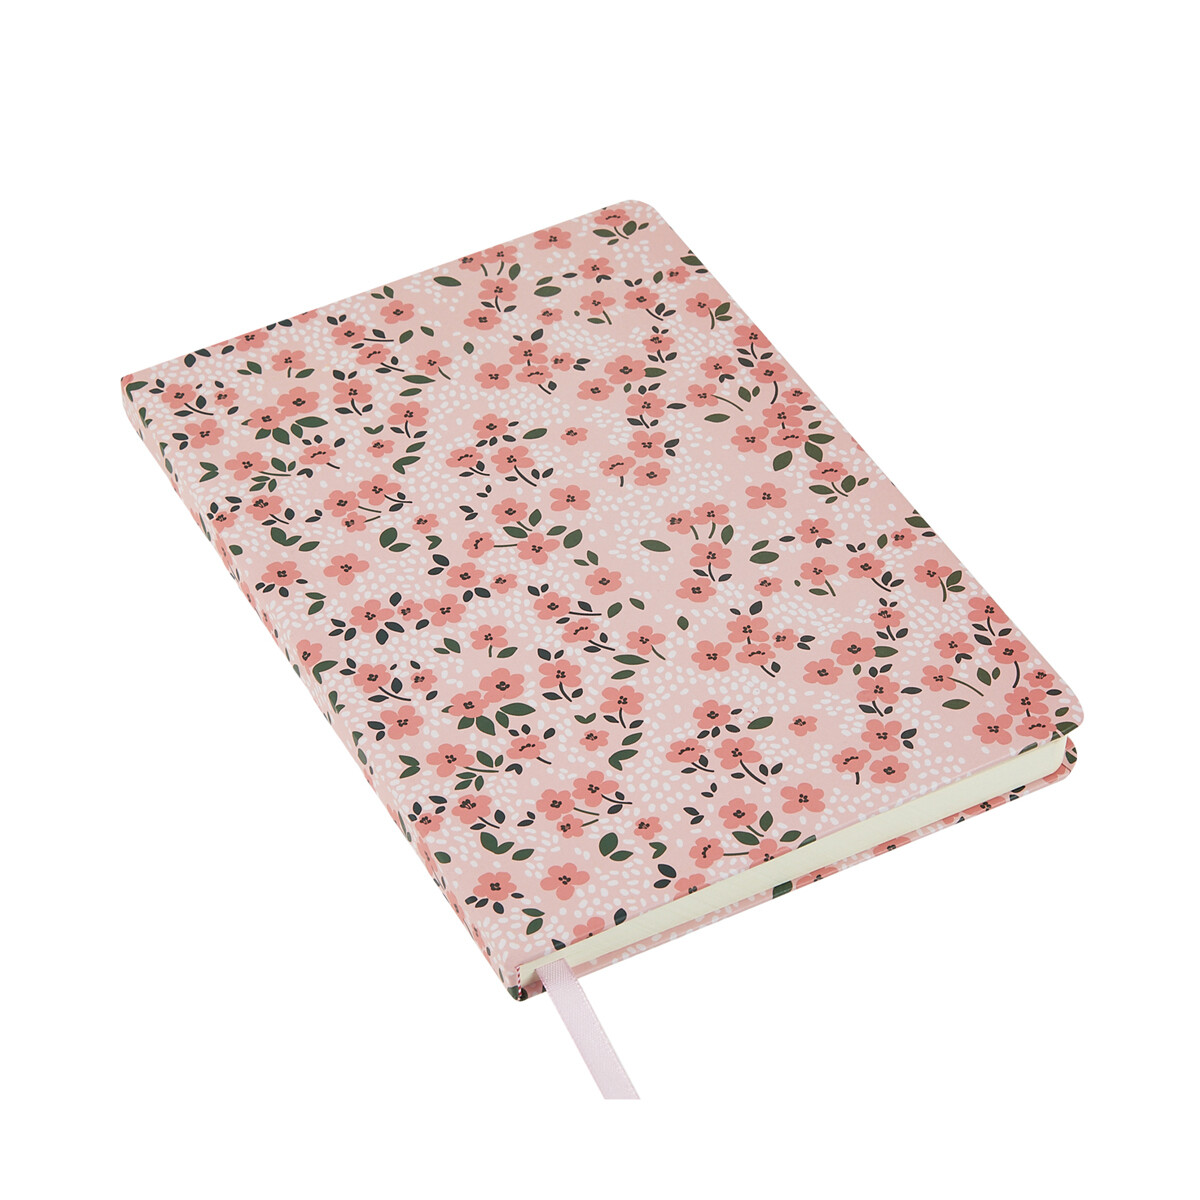 Flower - Hardbound Lined Journal A5 Notebook